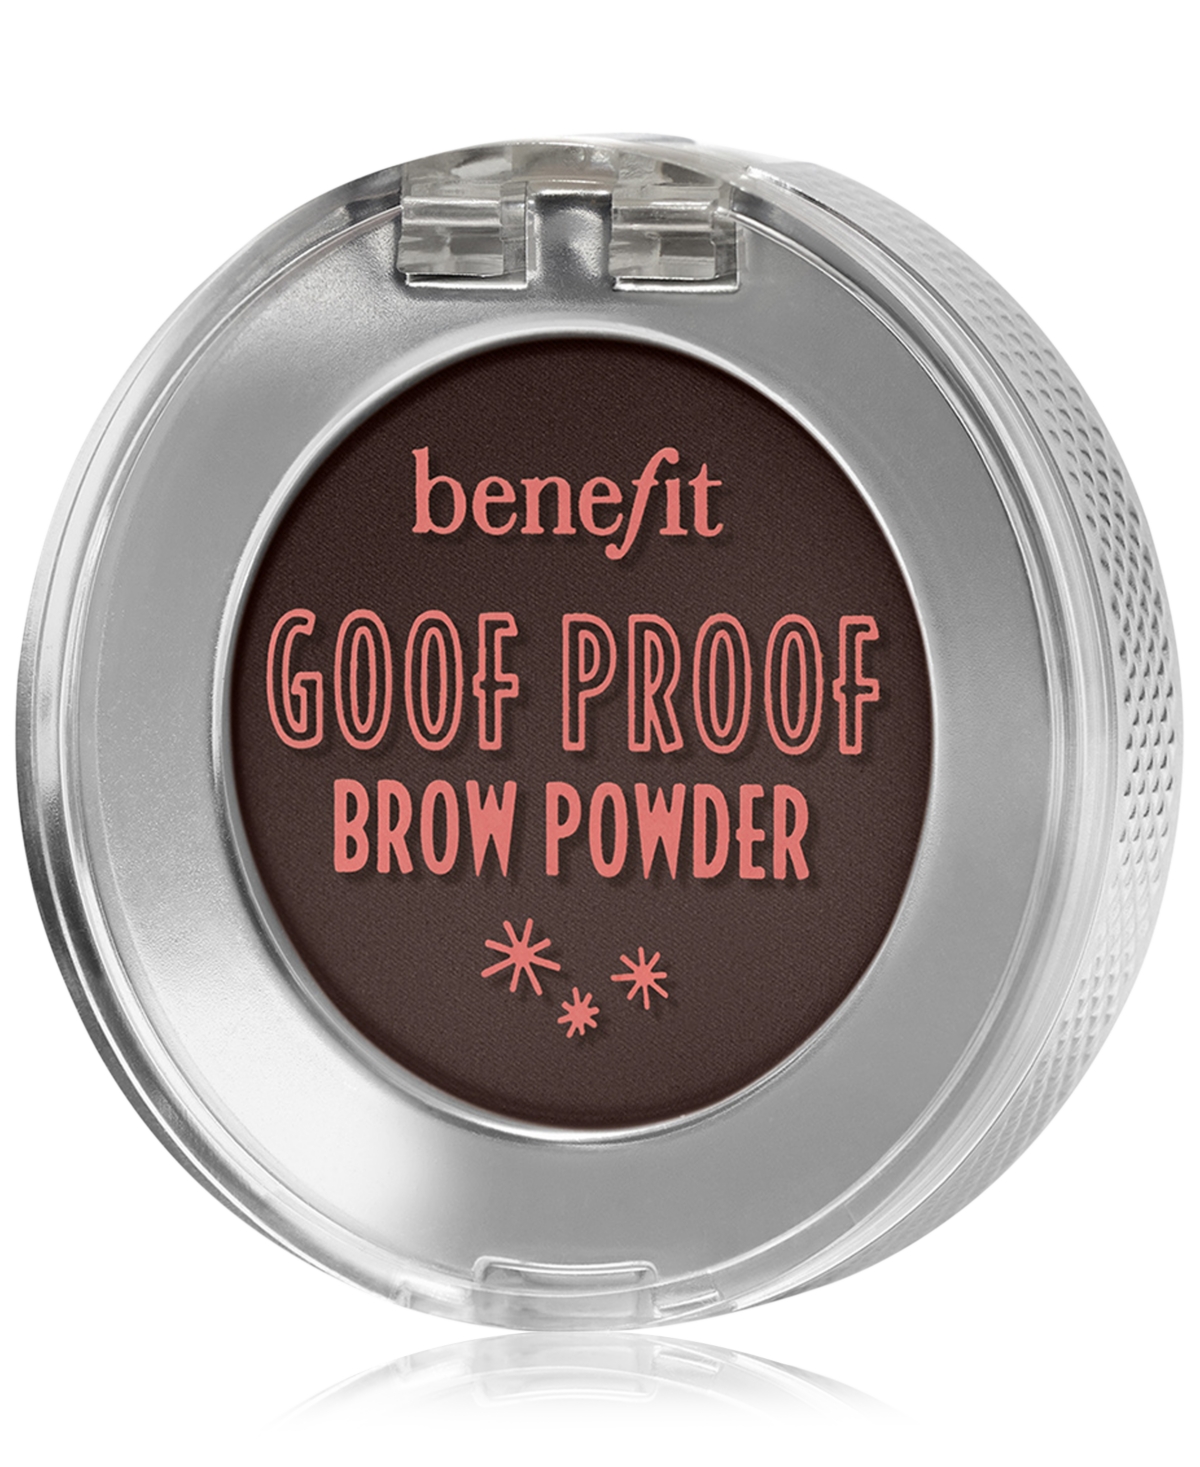 Benefit Cosmetics Goof Proof Brow Powder In - Warm Black Brown